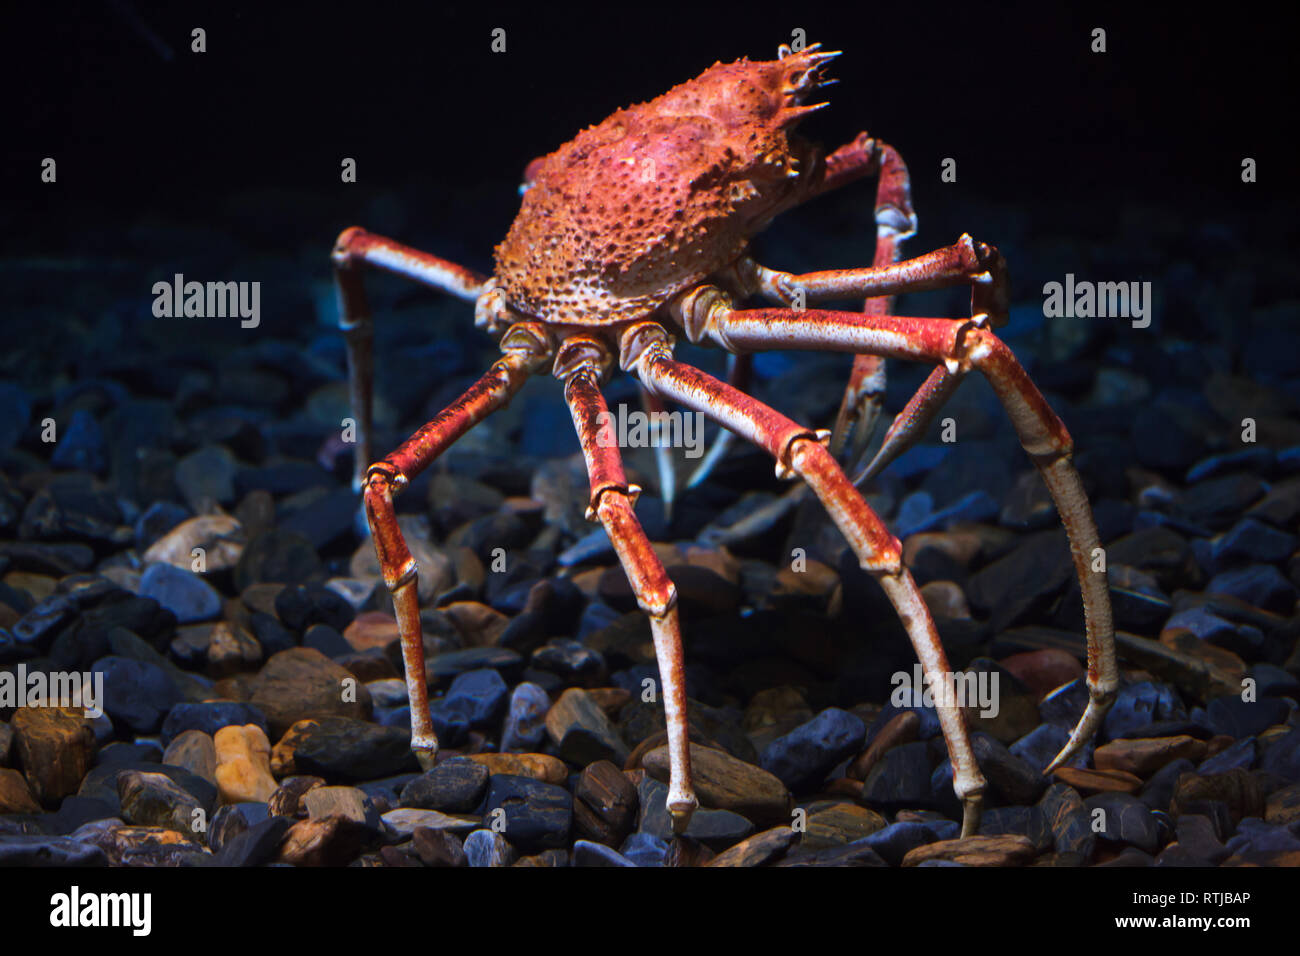 Japanese spider crab (Macrocheira kaempferi), also known as the giant spider crab. Stock Photo